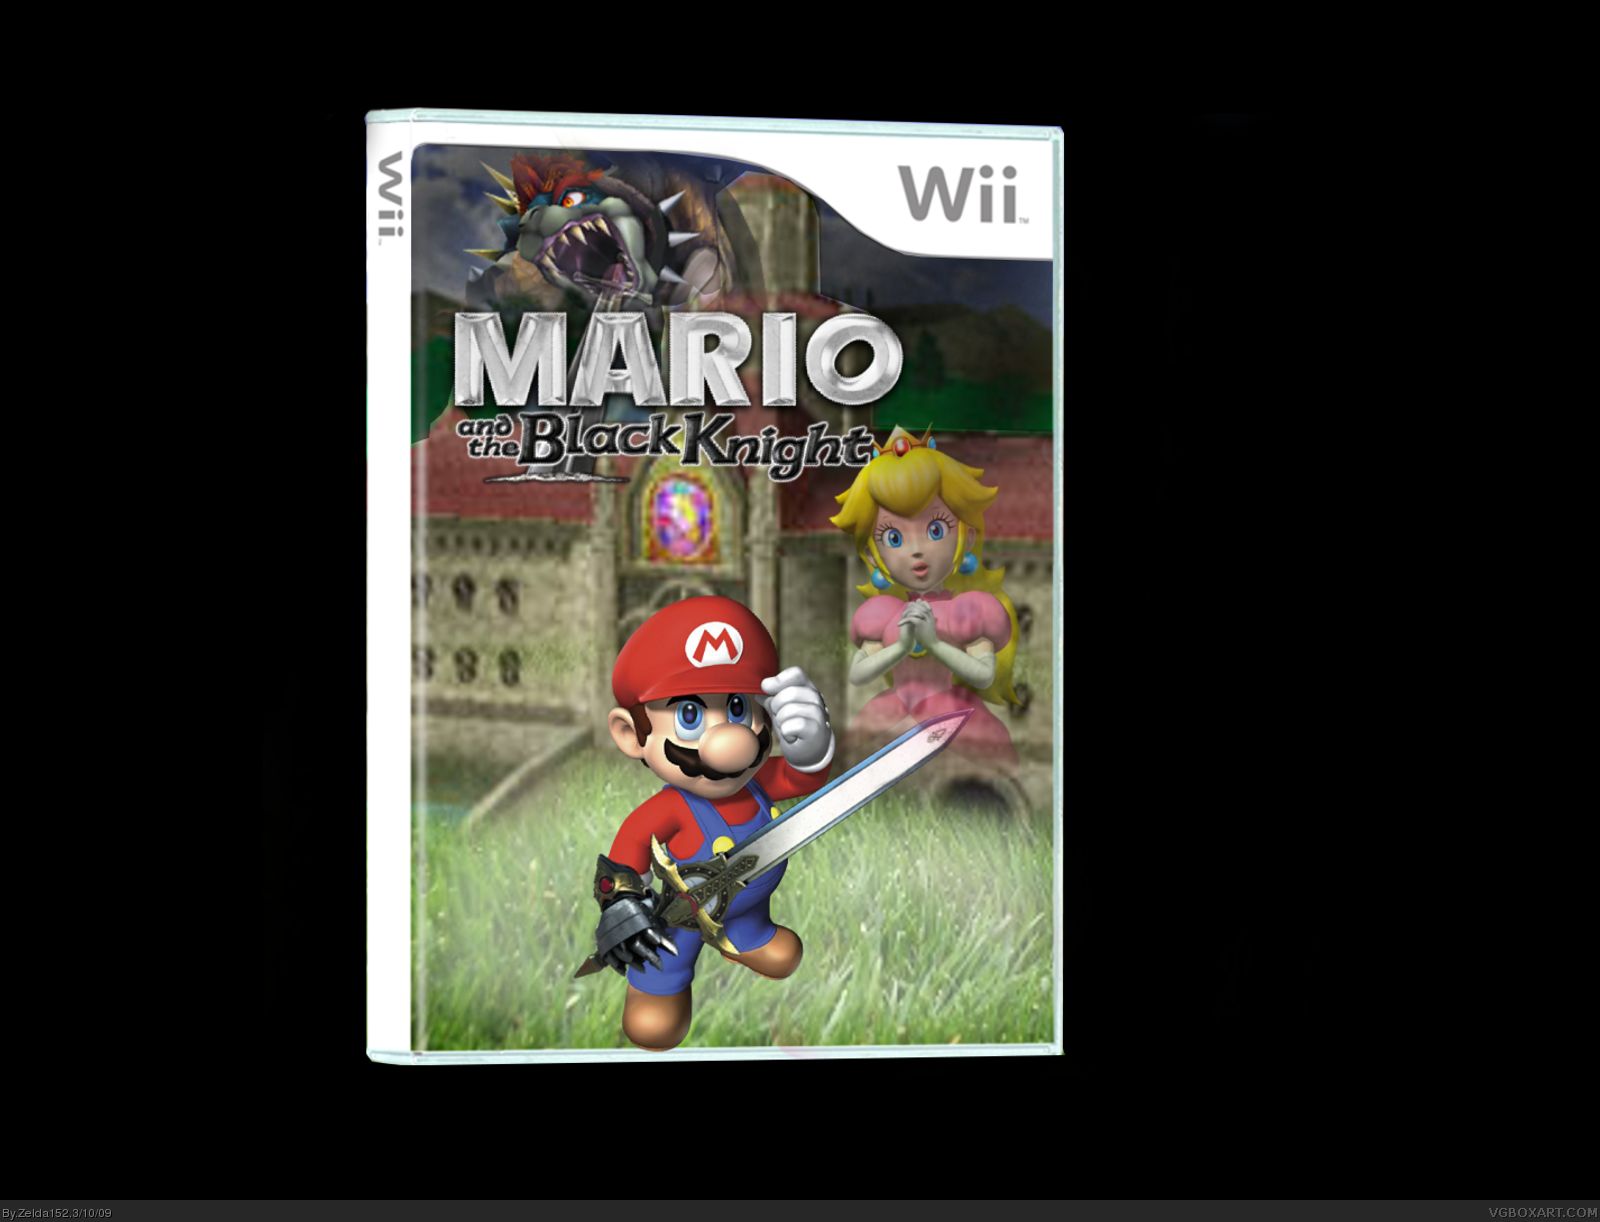 Mario and the Black Knight box cover